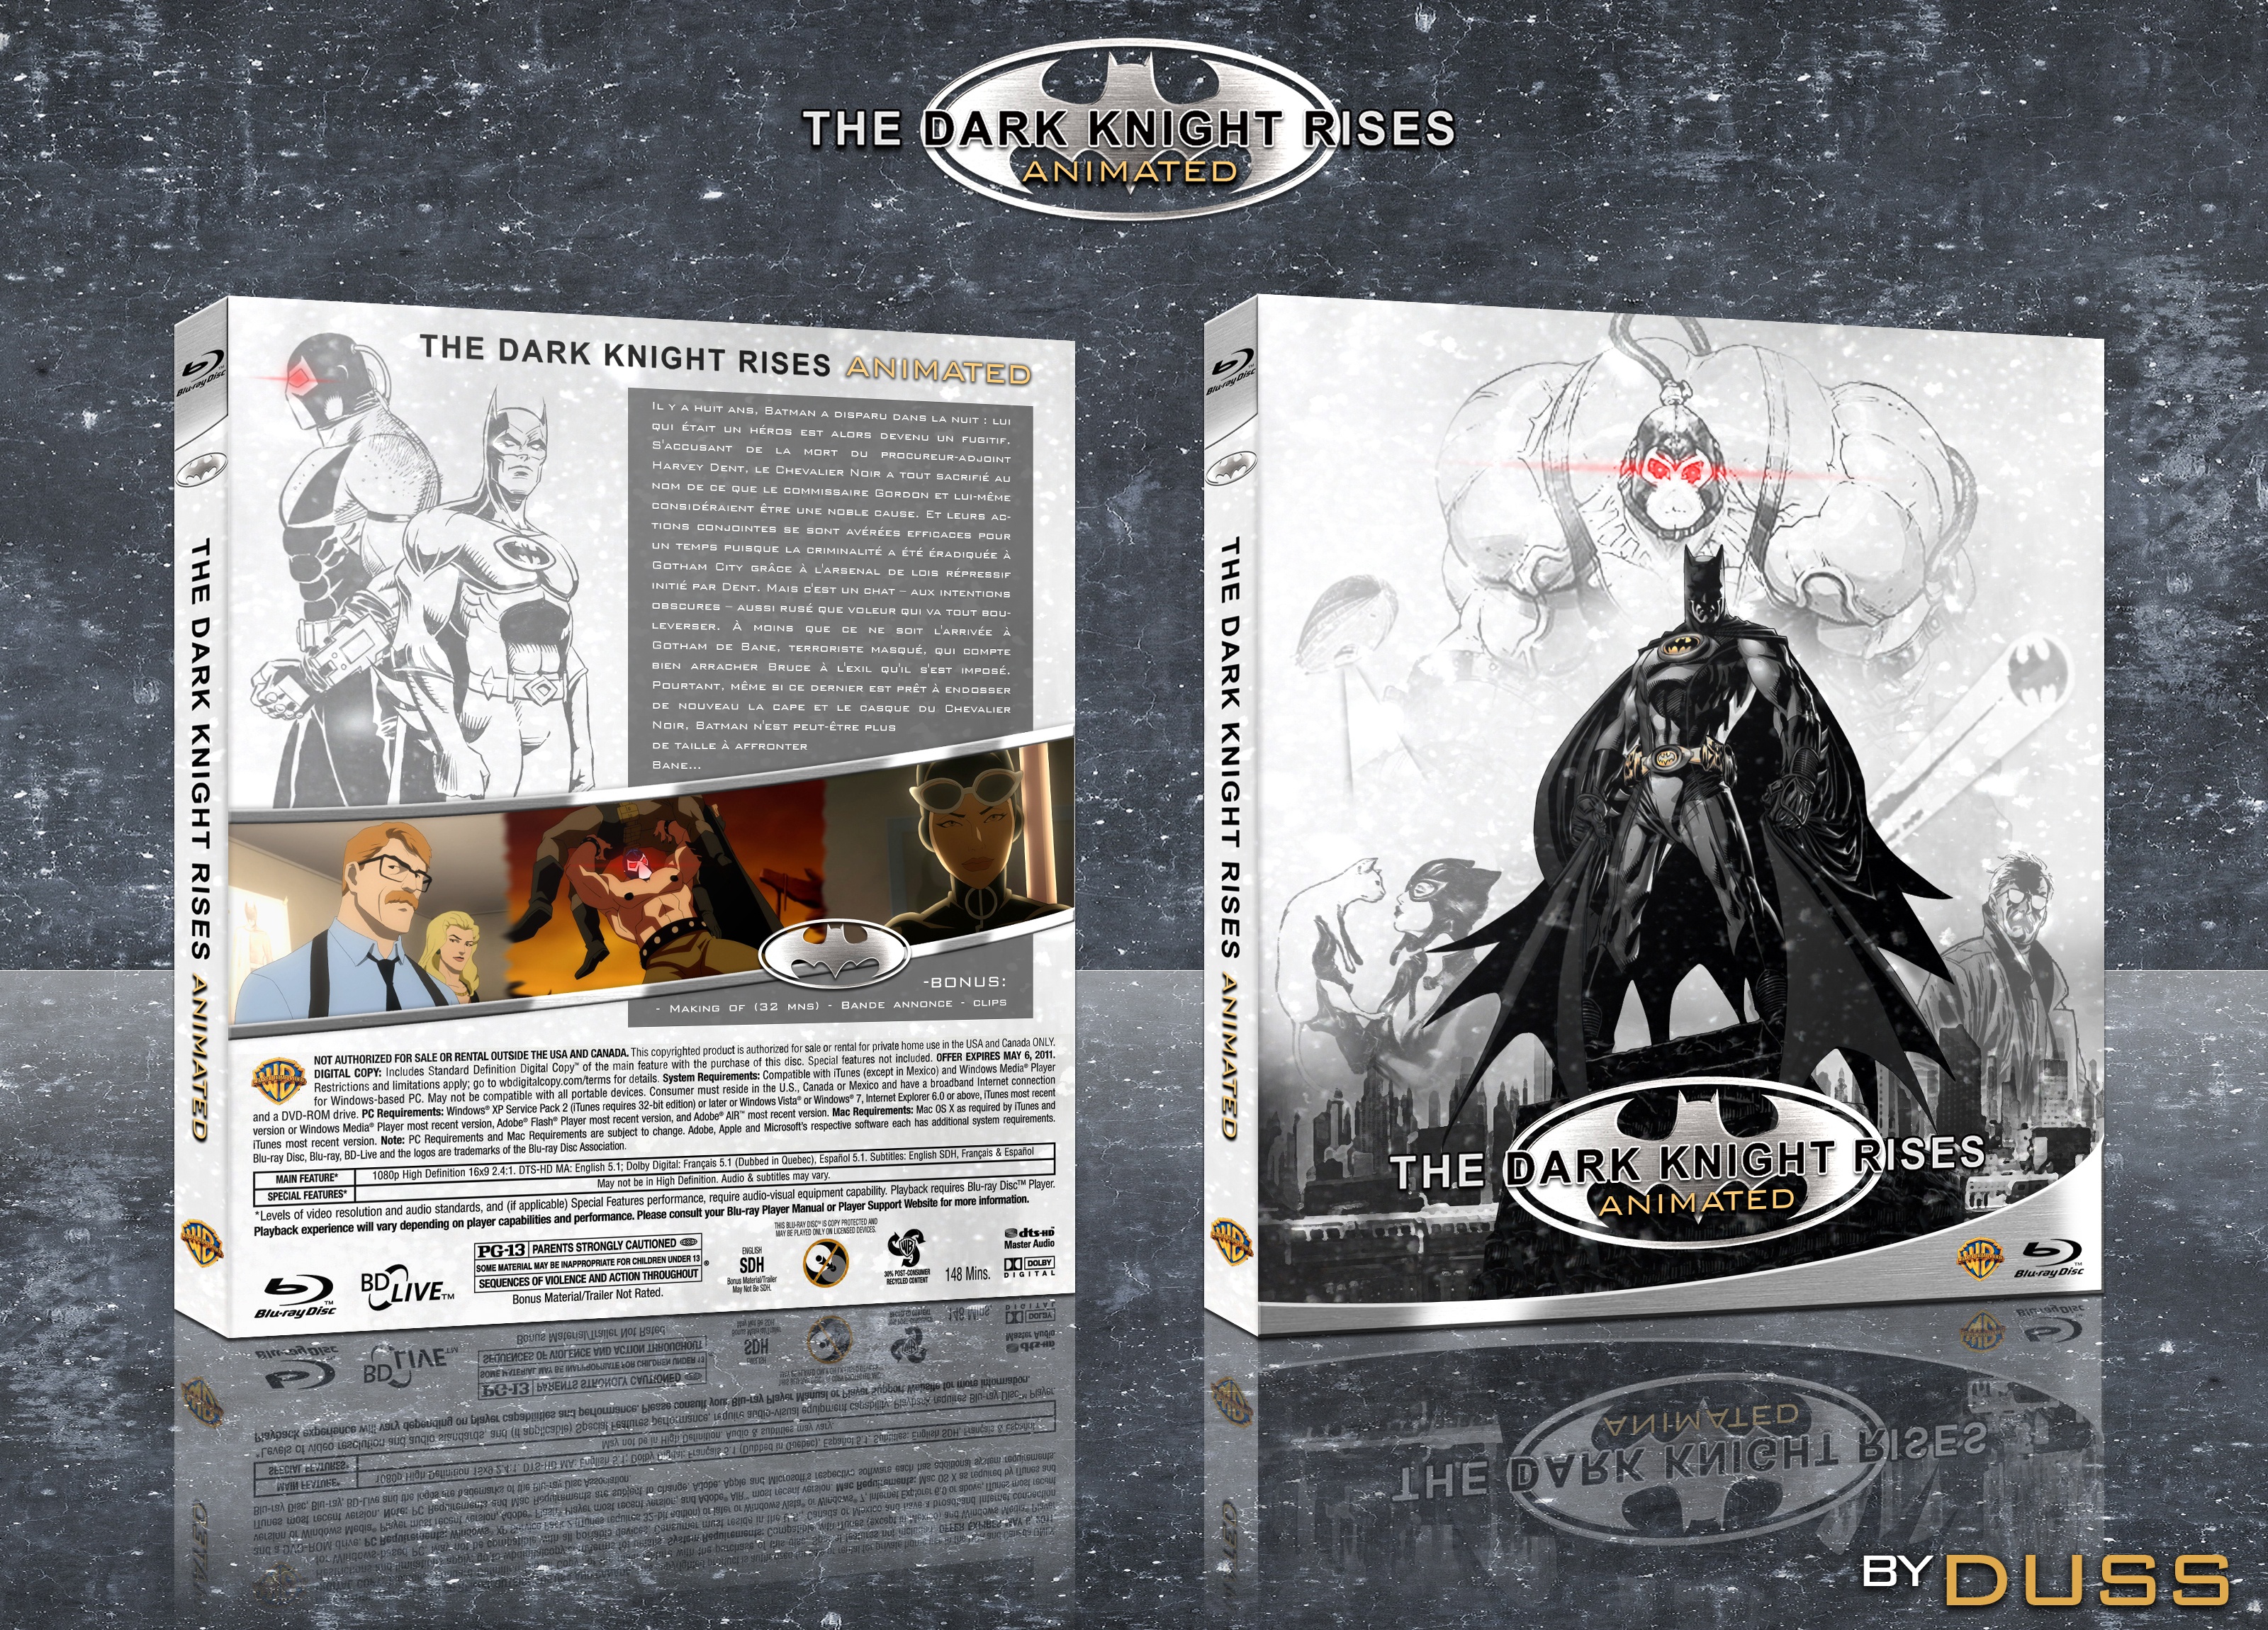 The dark knight rises animated box cover